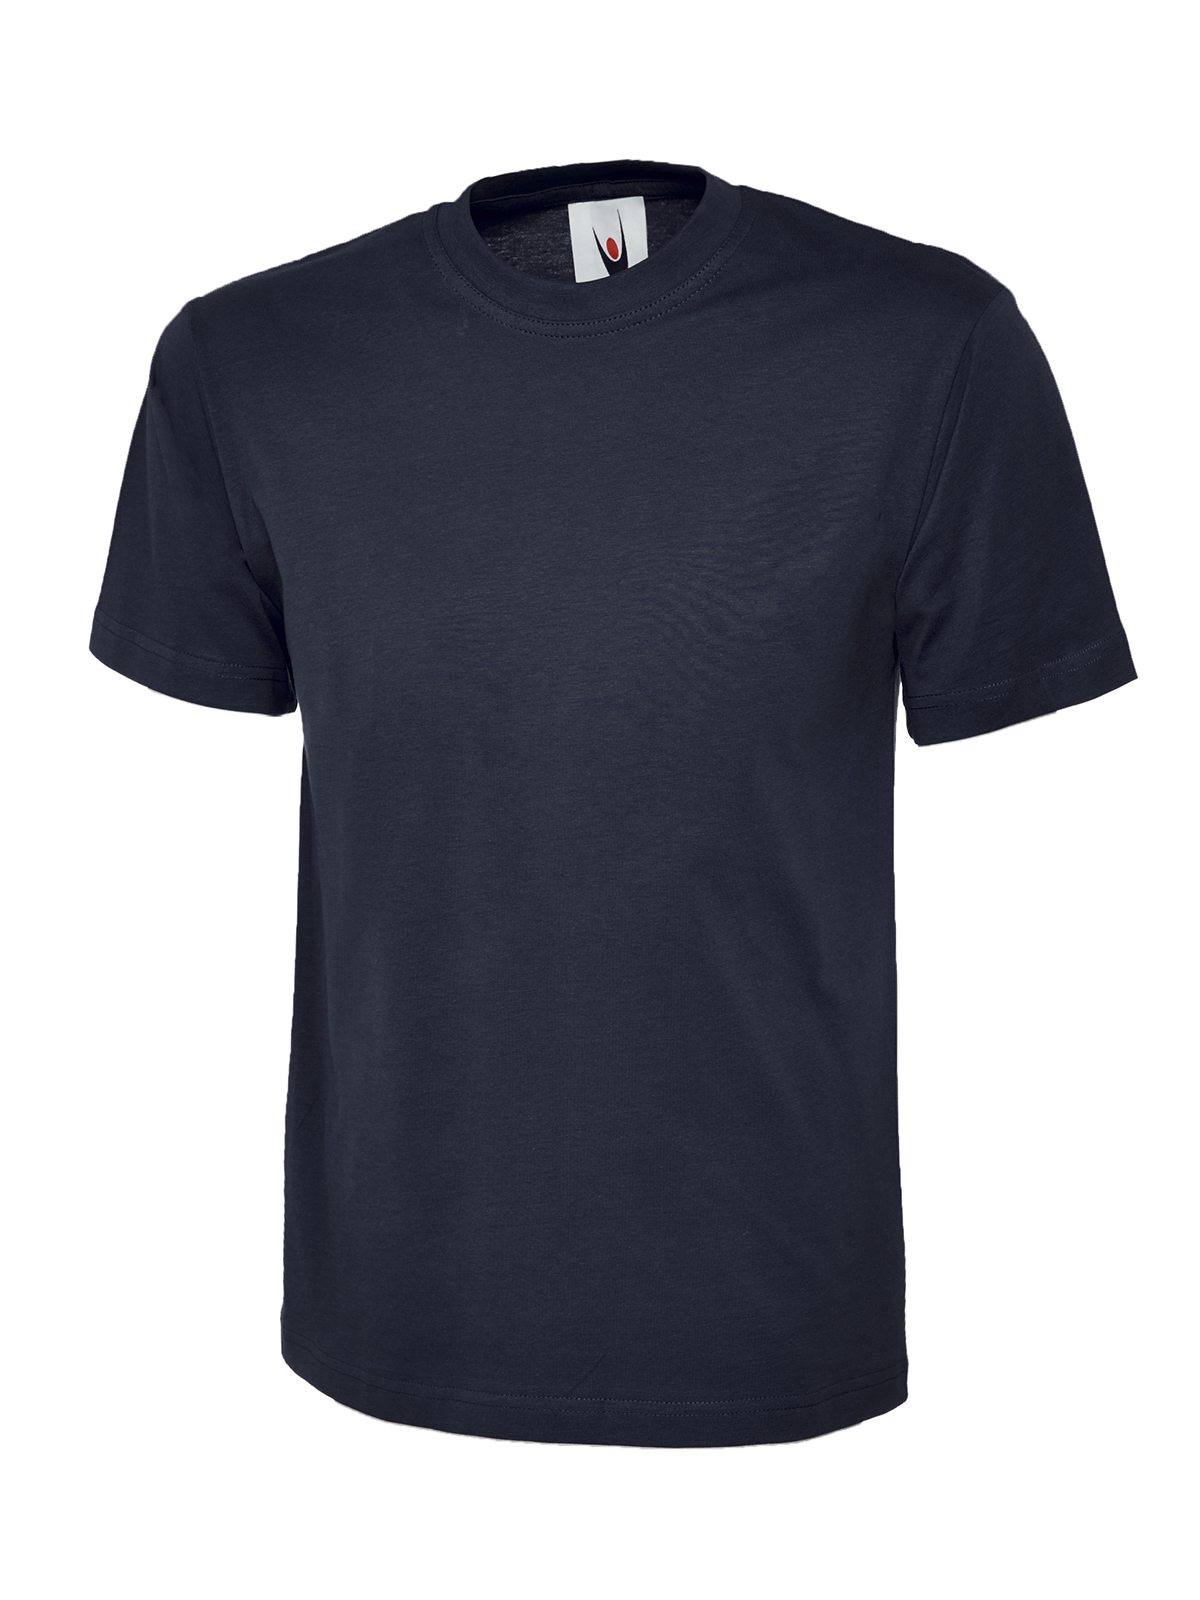 T-shirt, Navy - Size 2XL